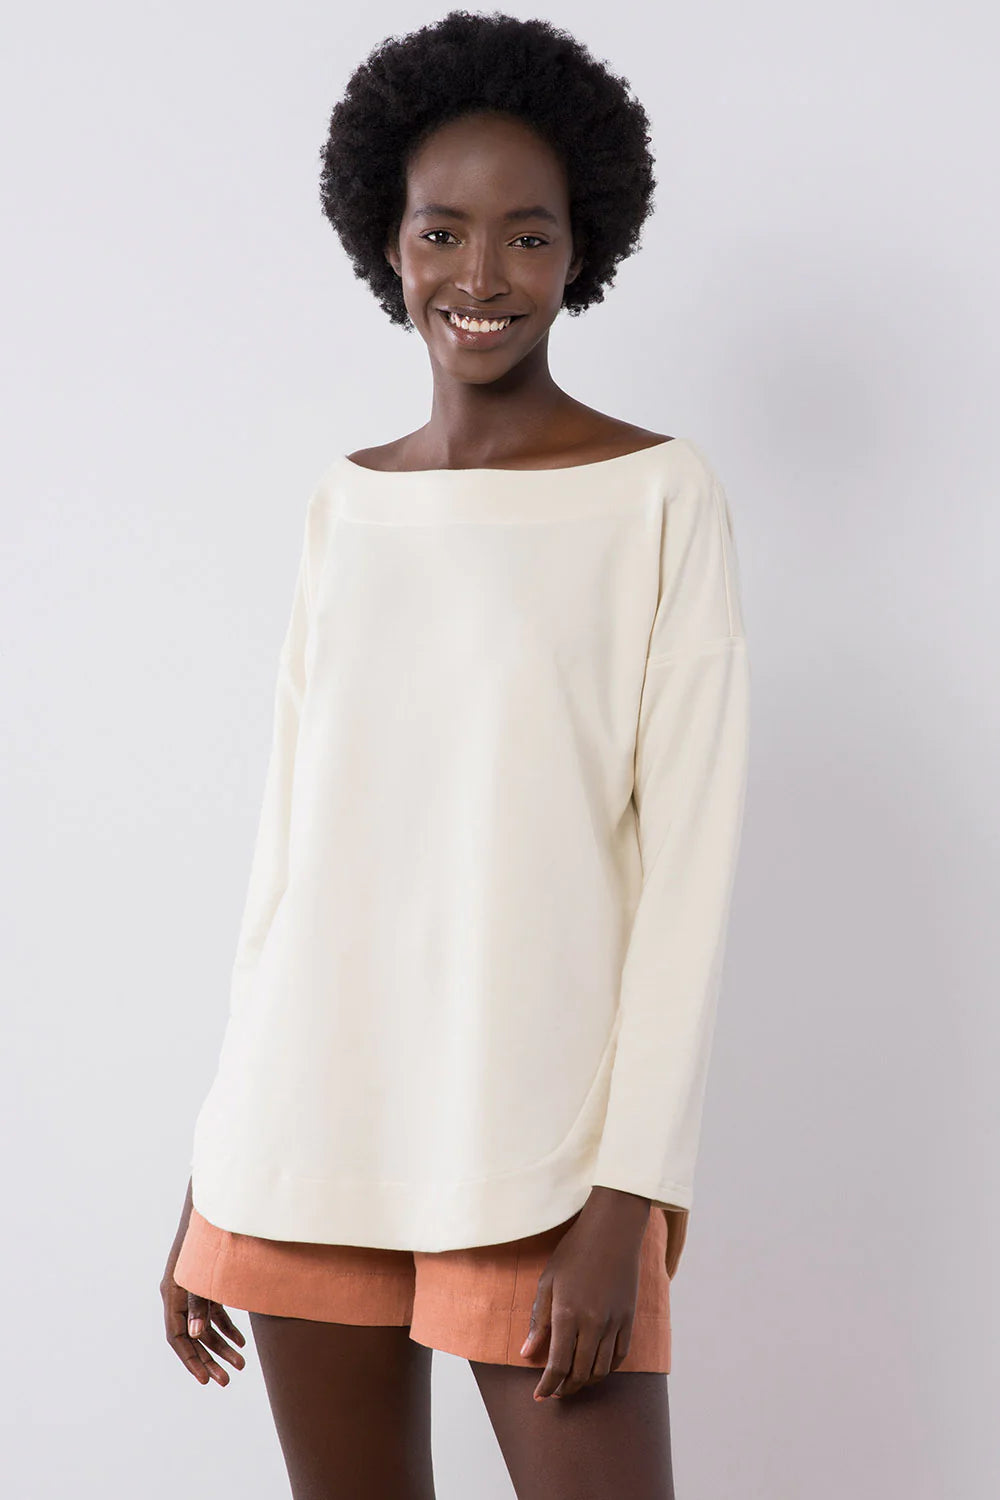 Floe Sweater in Cream